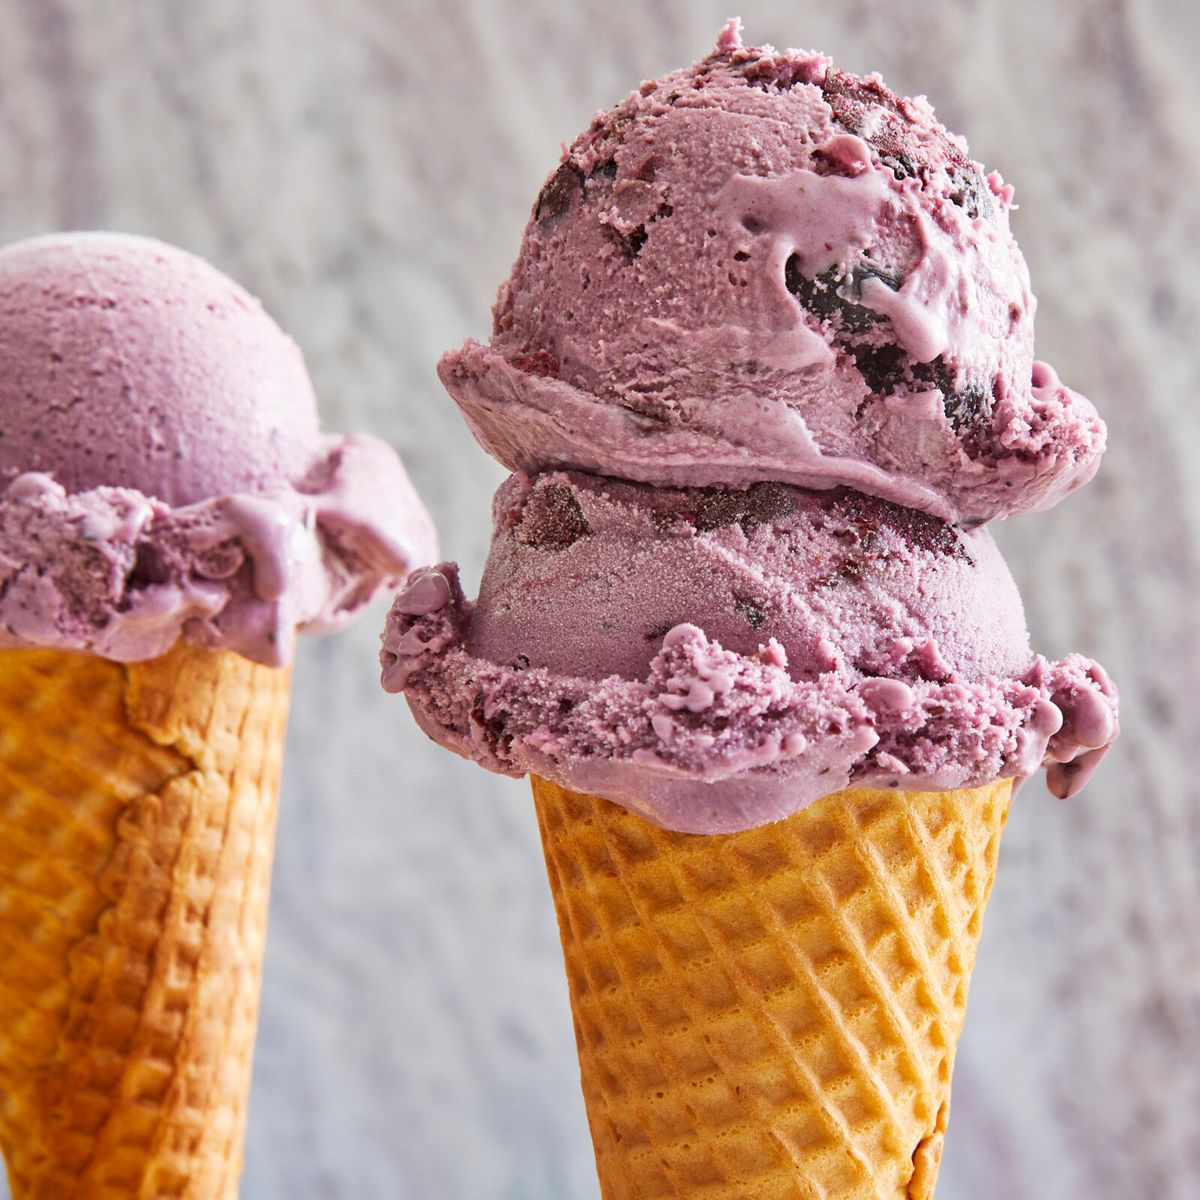 the pioneer woman's blueberry ice cream recipe